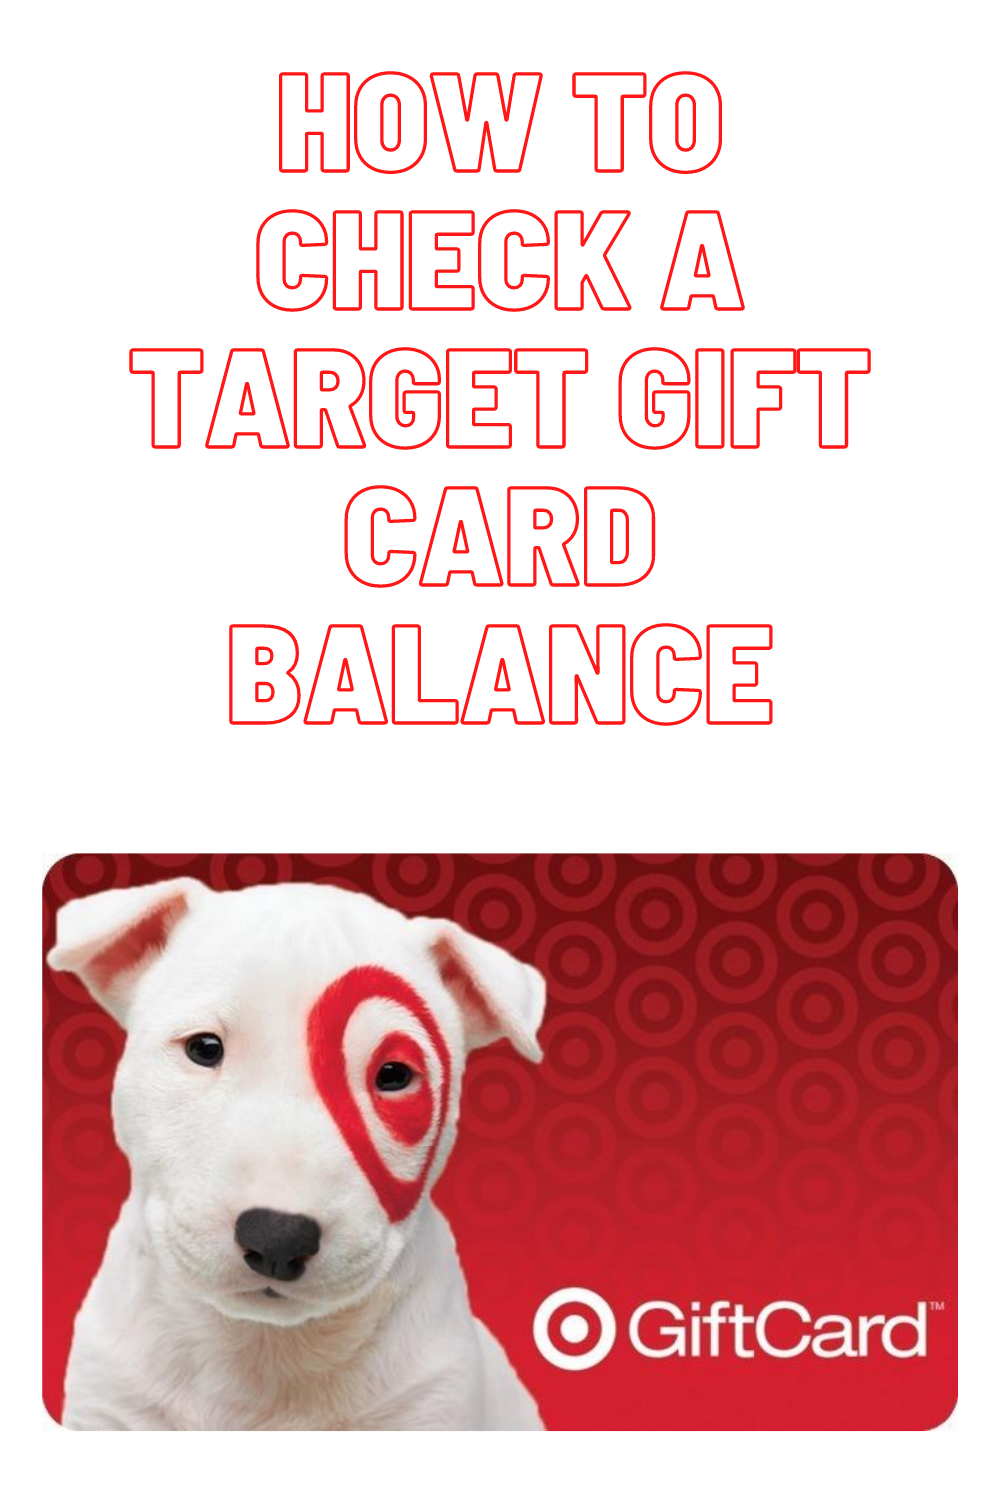 Check Gift Card Balance